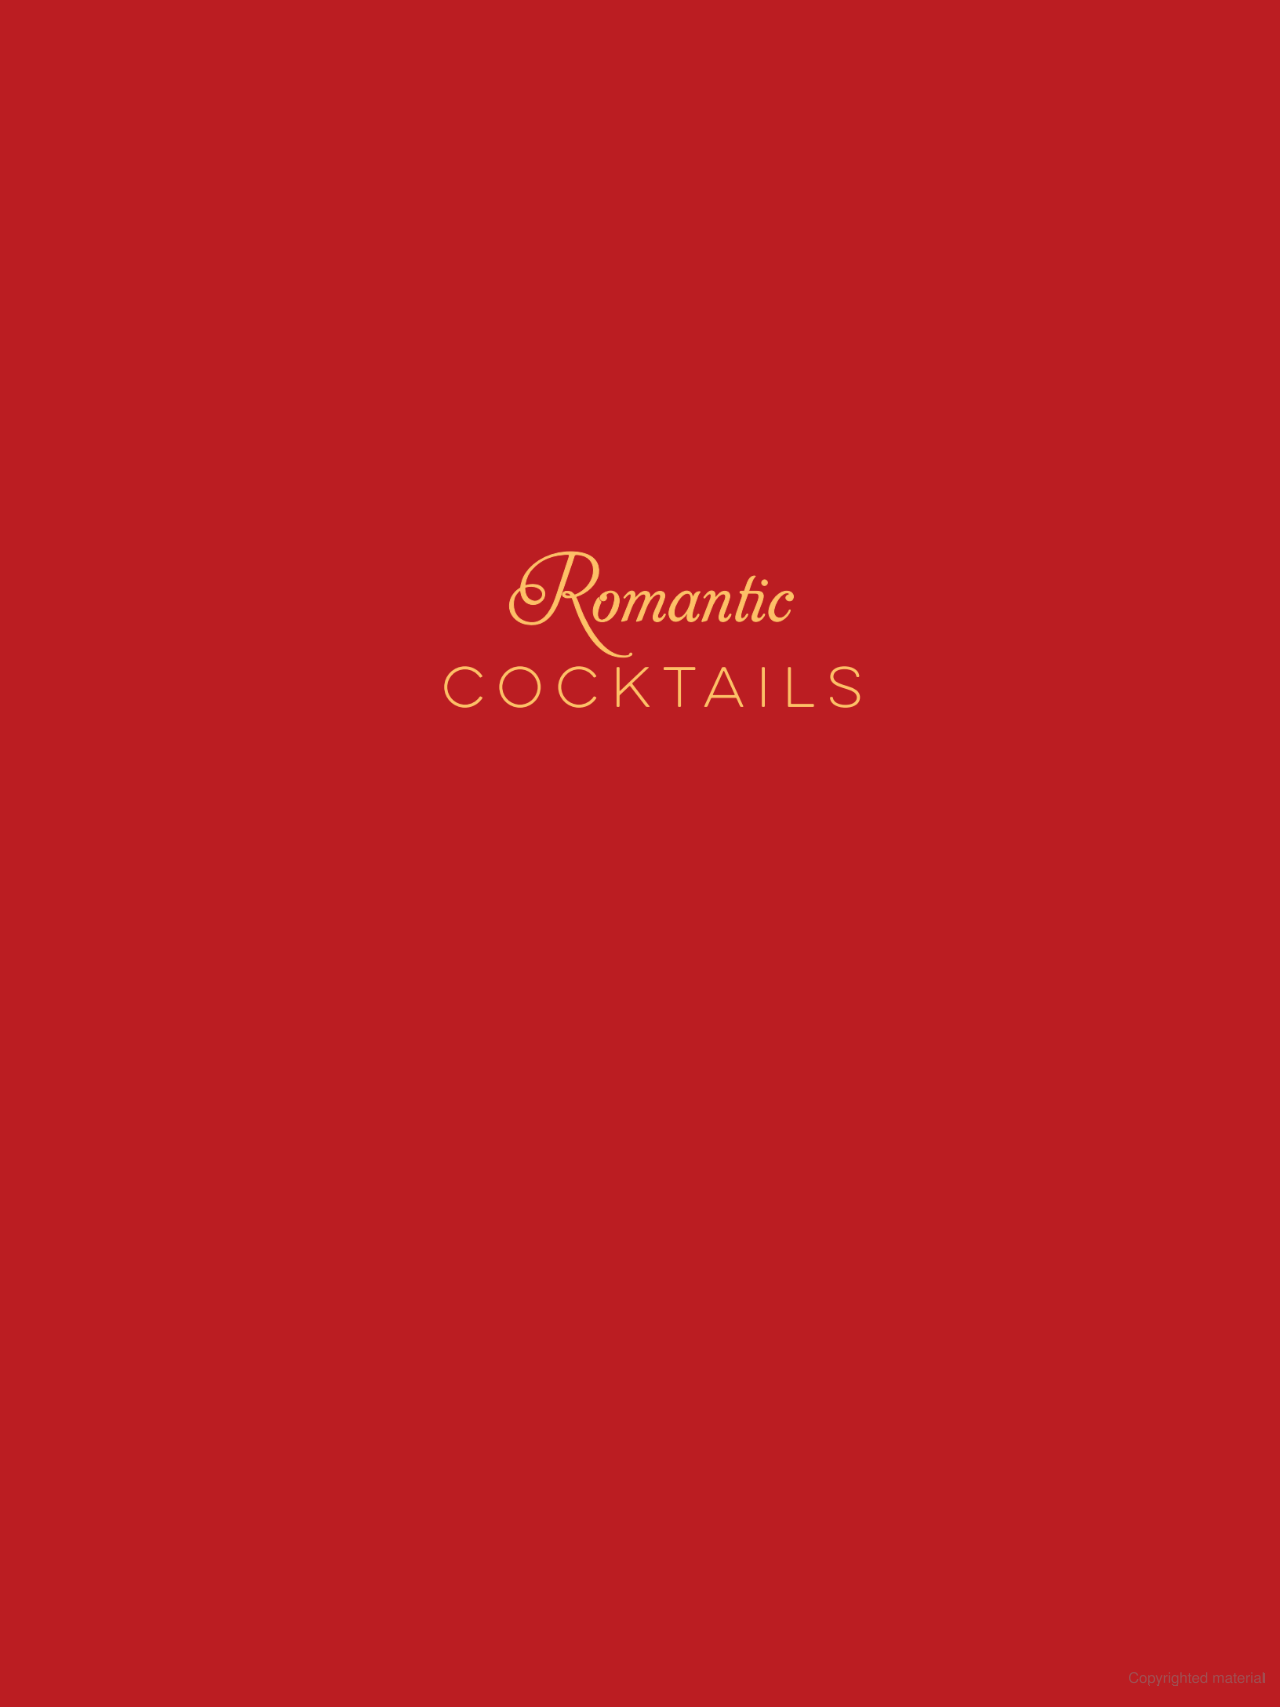 Romantic Cocktails Book